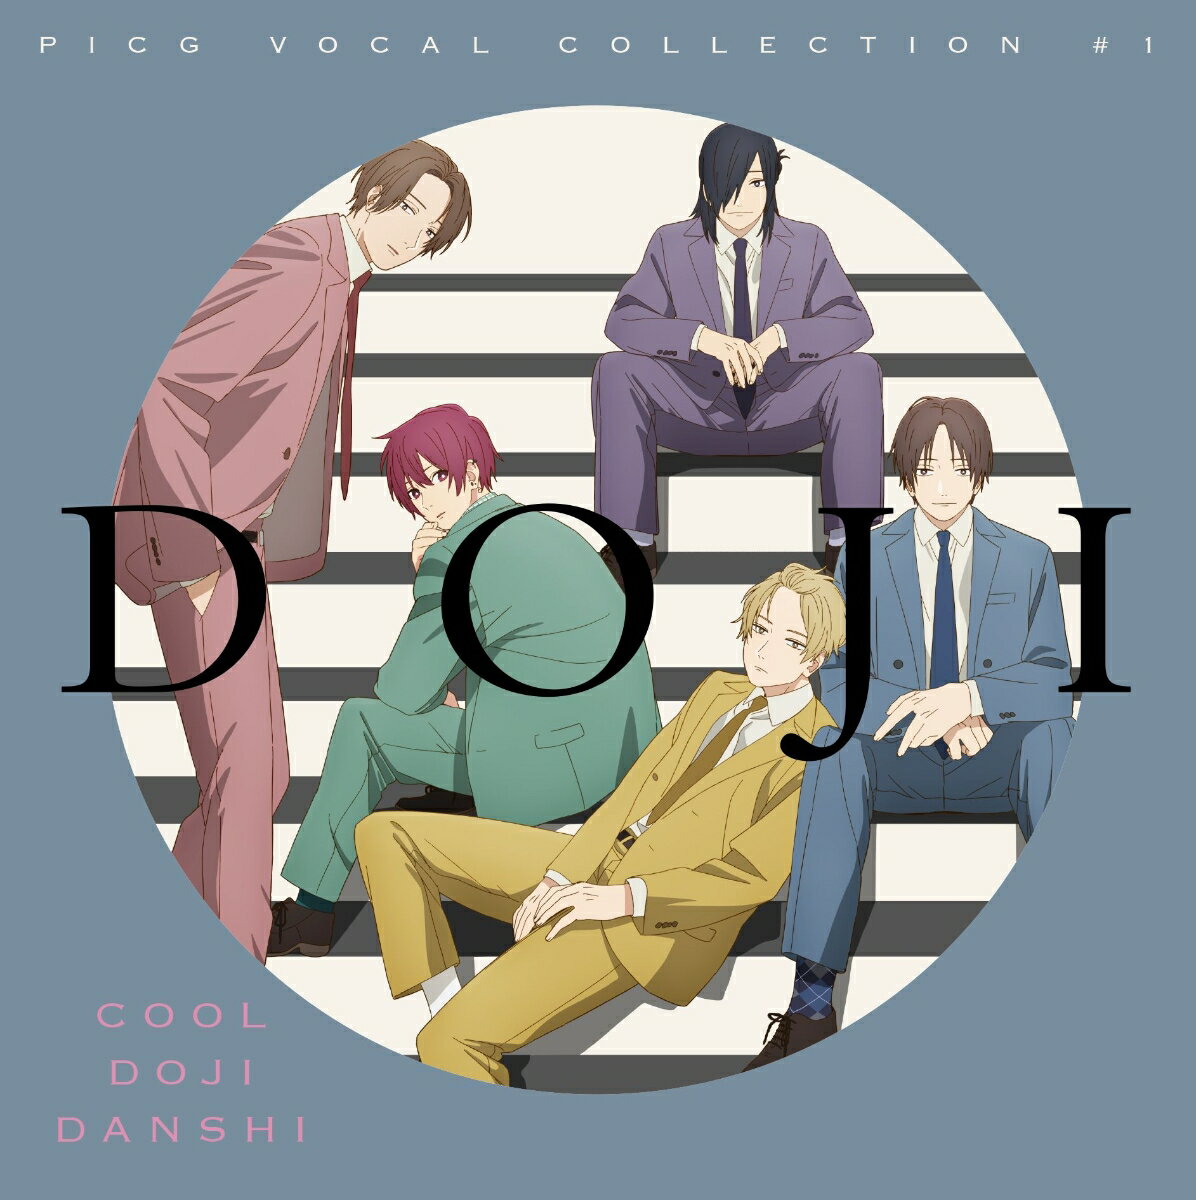 TVアニメ「クールドジ男子」PICG VOCAL COLLECTION #1 「DOJI」 [ PICG ]